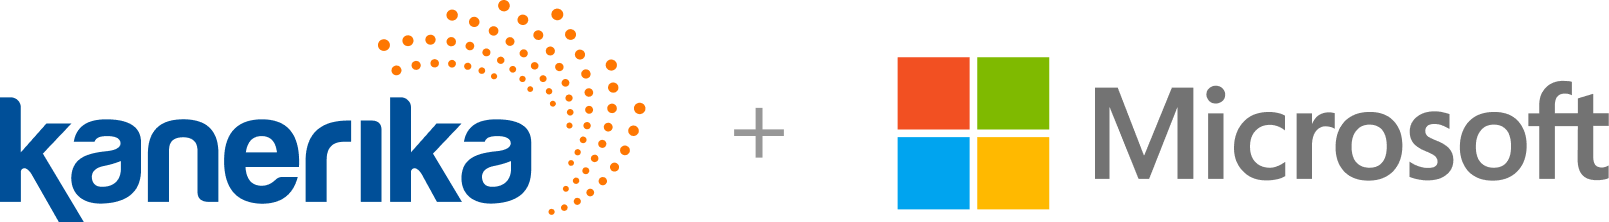 Microsoft and Kanerika logos